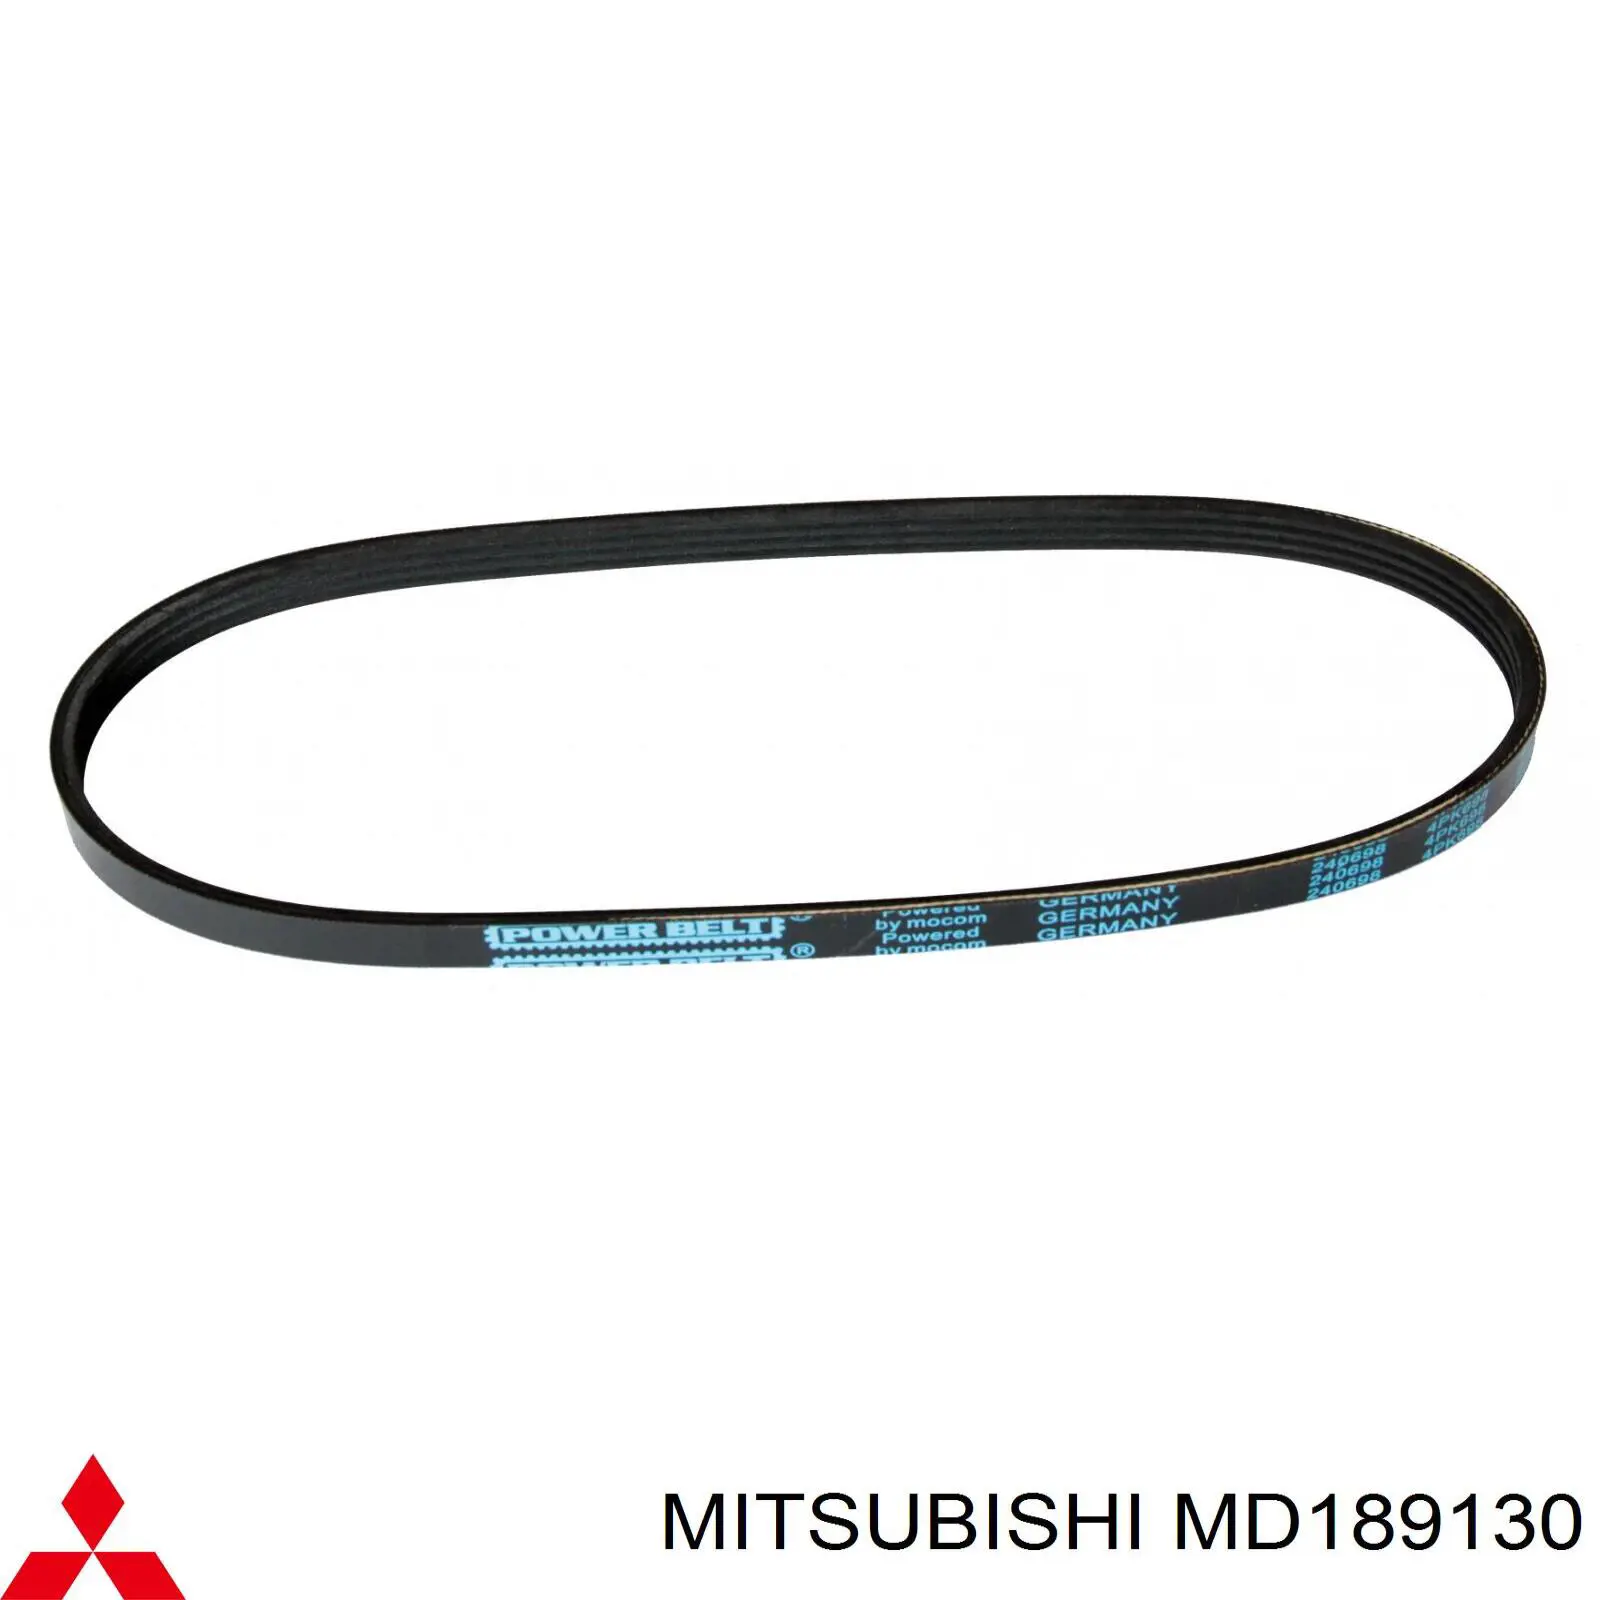 MD189130 Mitsubishi correa trapezoidal